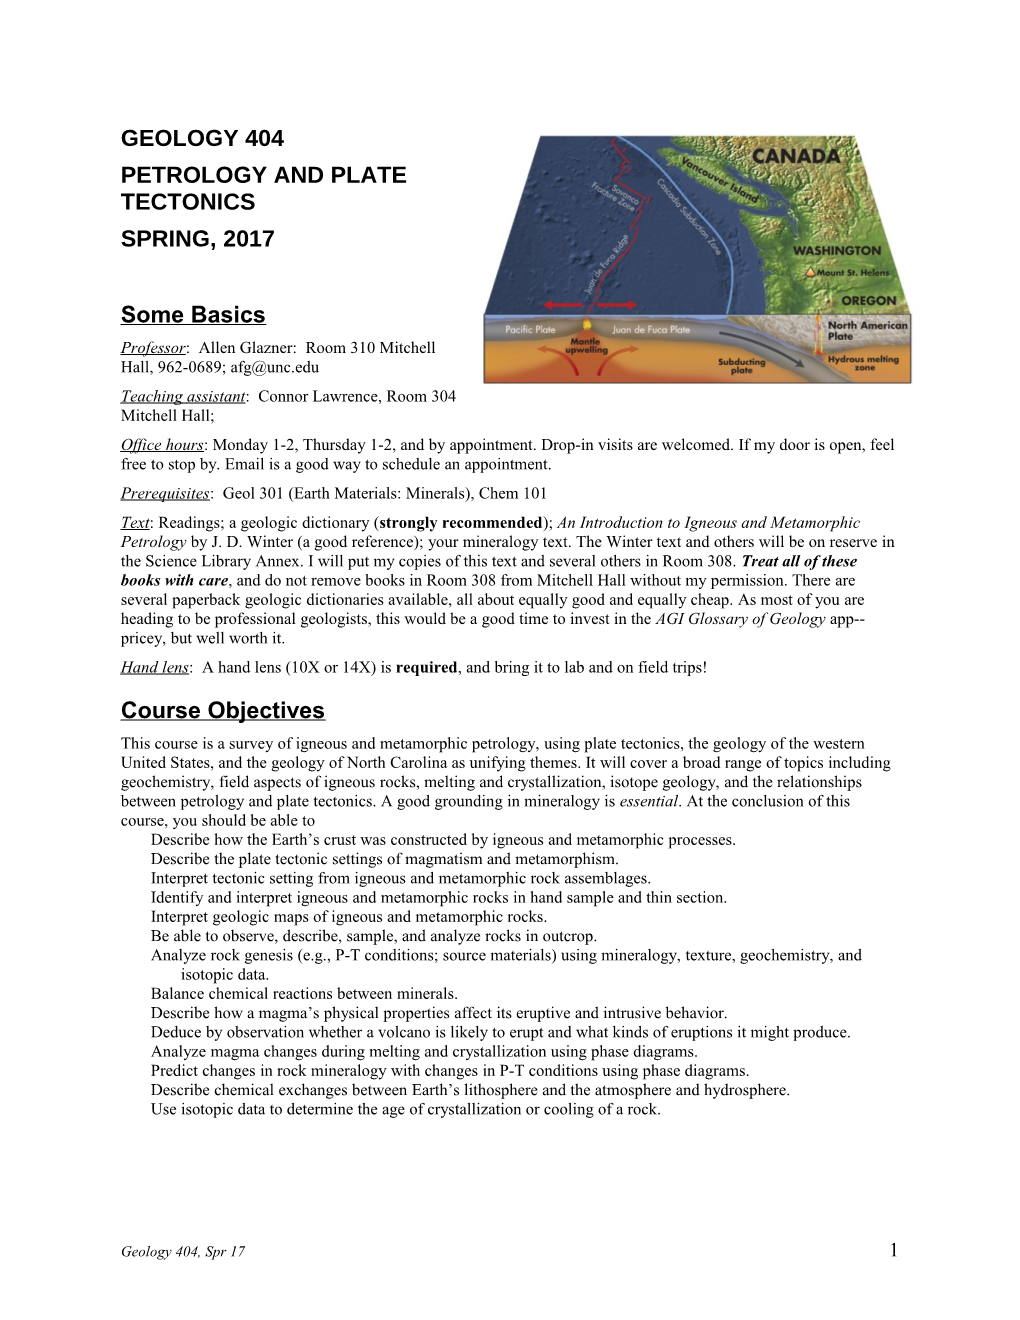 Petrology and Plate Tectonics